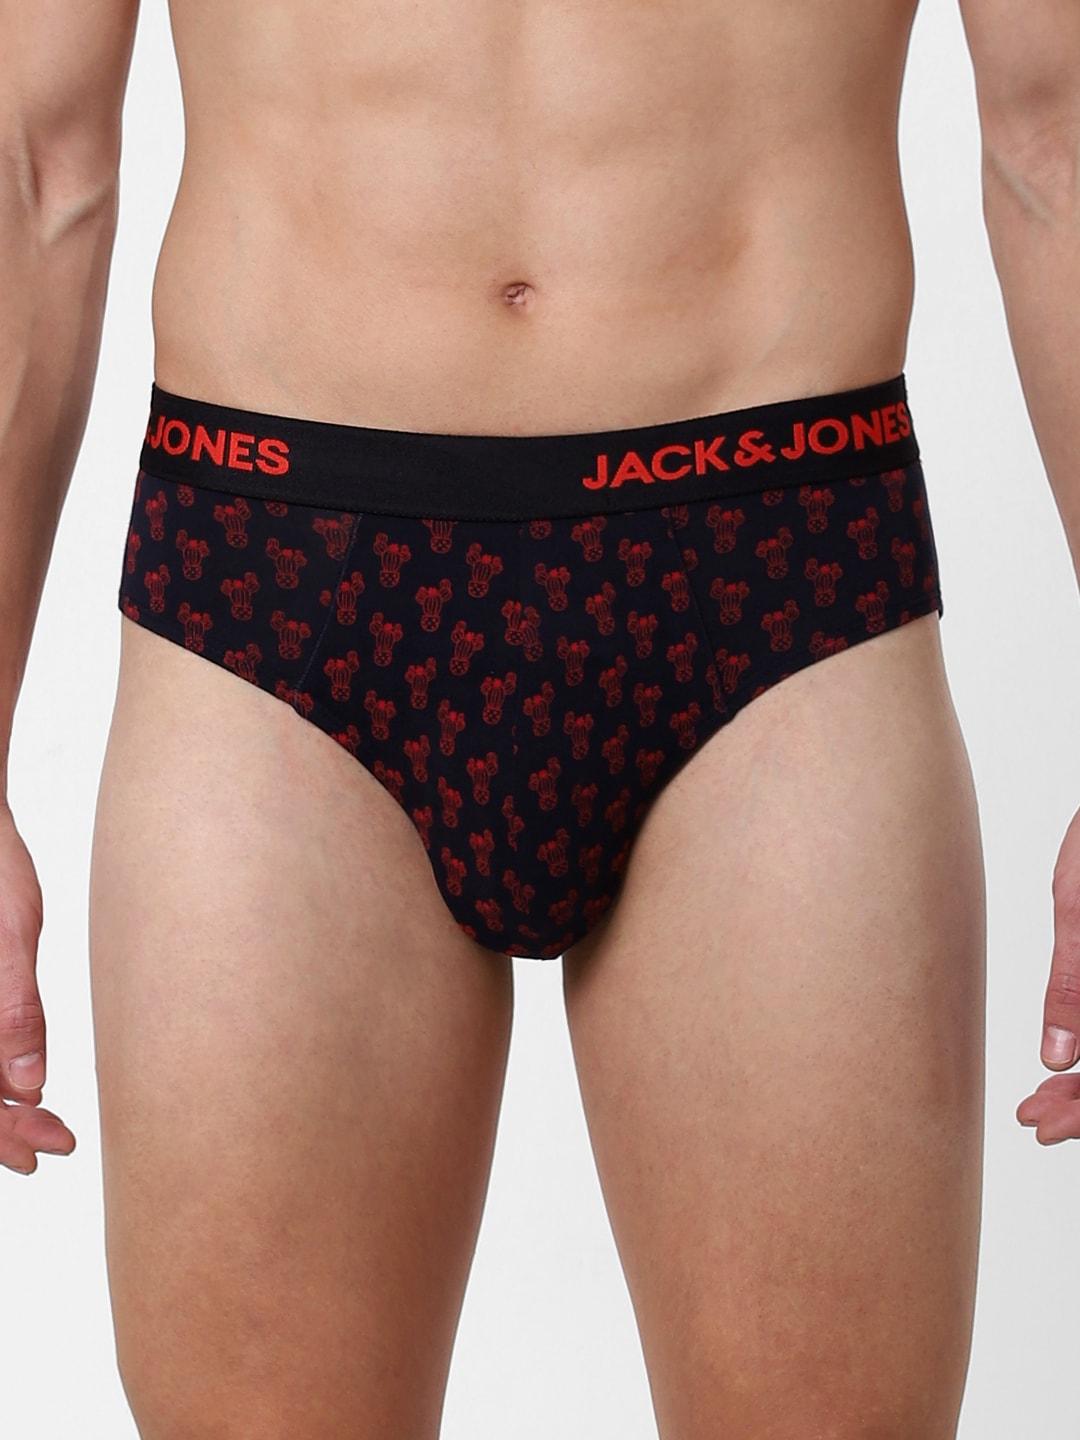 jack-&-jones-men-navy-blue-&-red-printed-briefs-2114335001